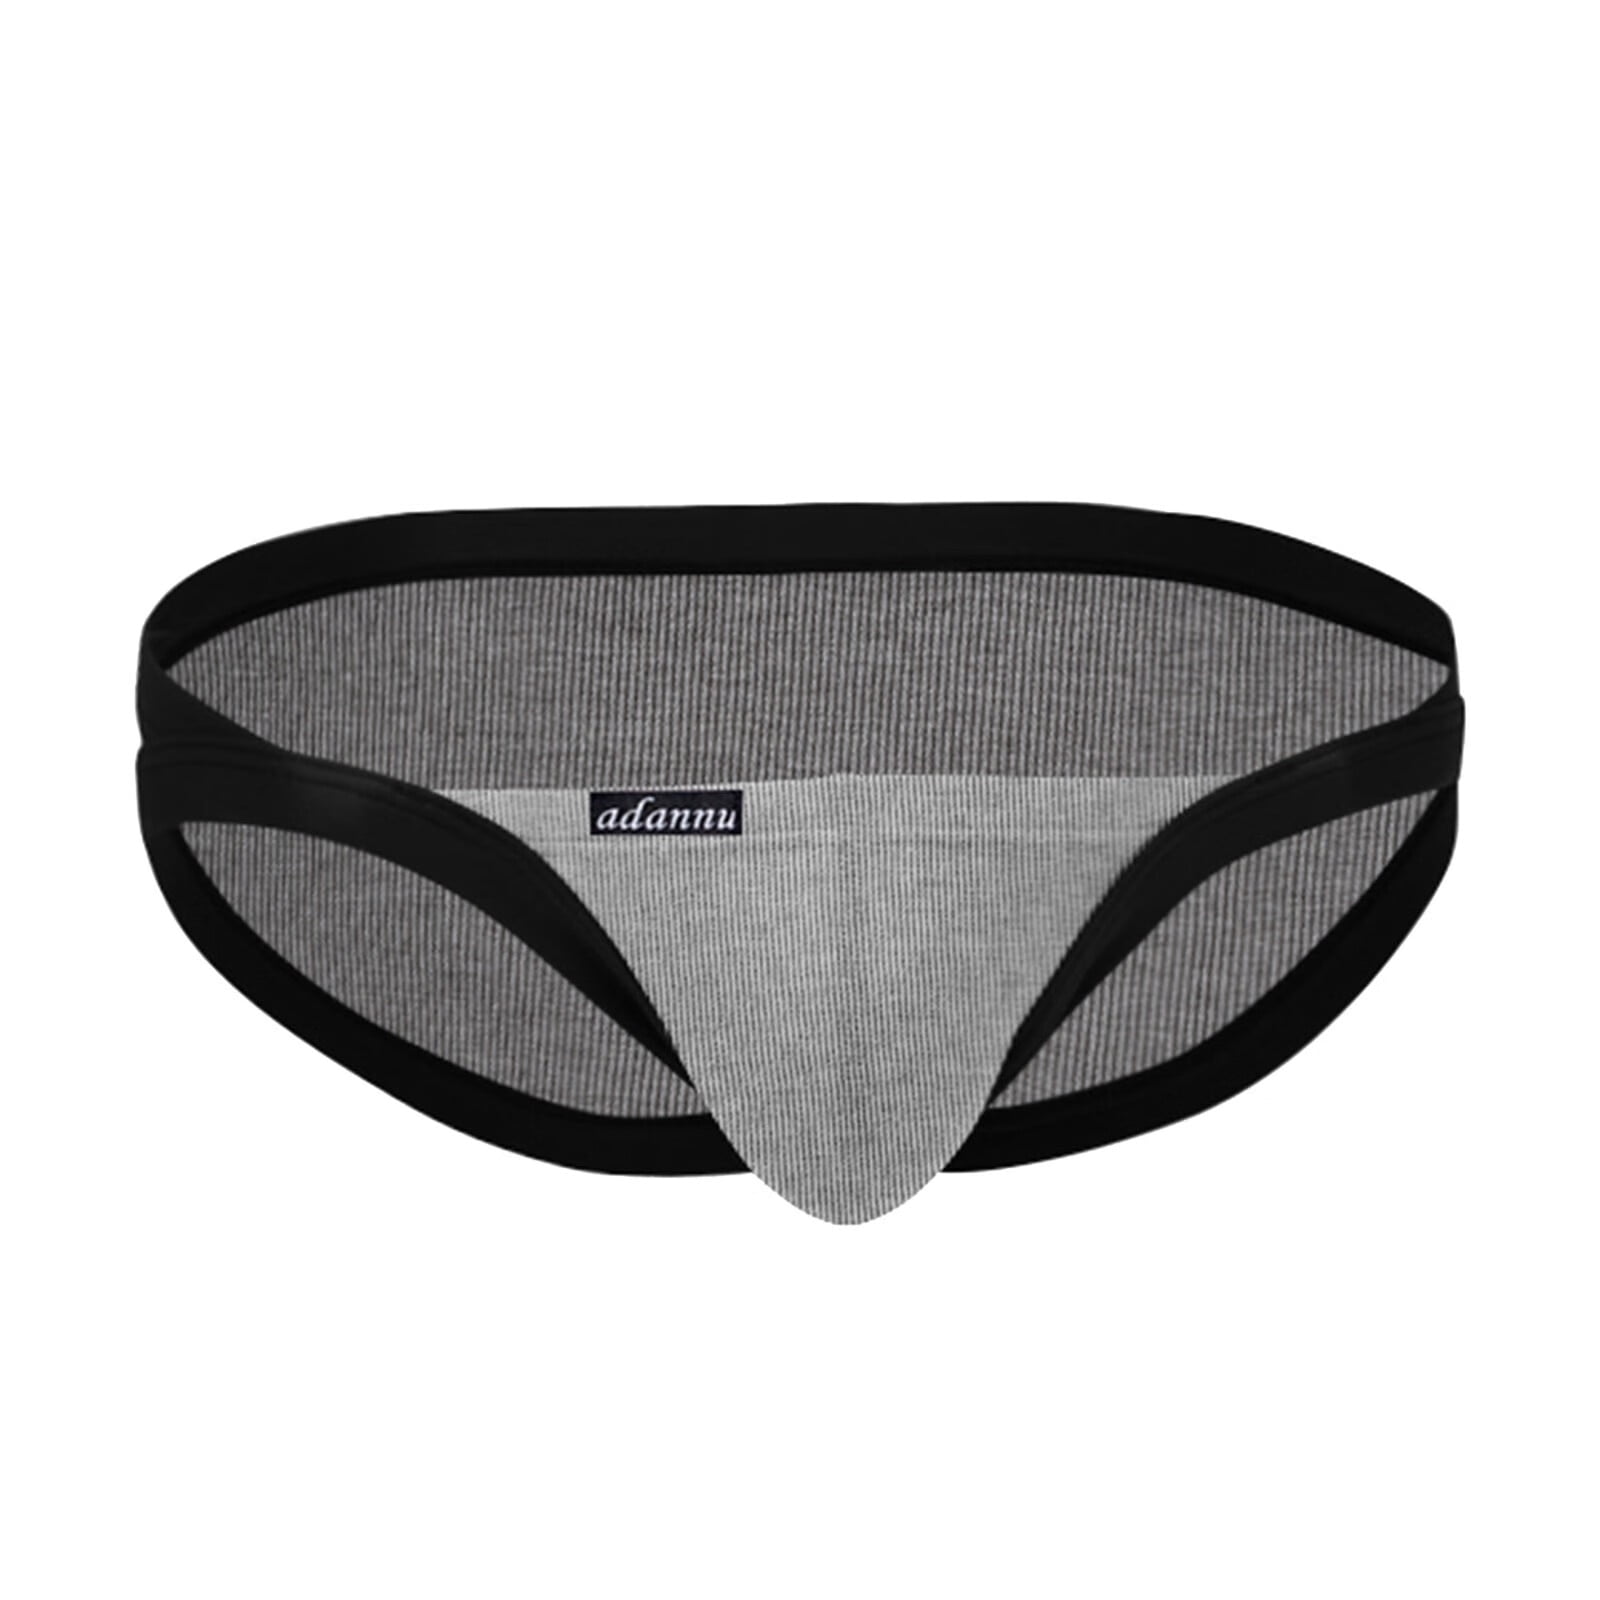 Spot Japan manufacturing EGDE men's low waist triangle underwear